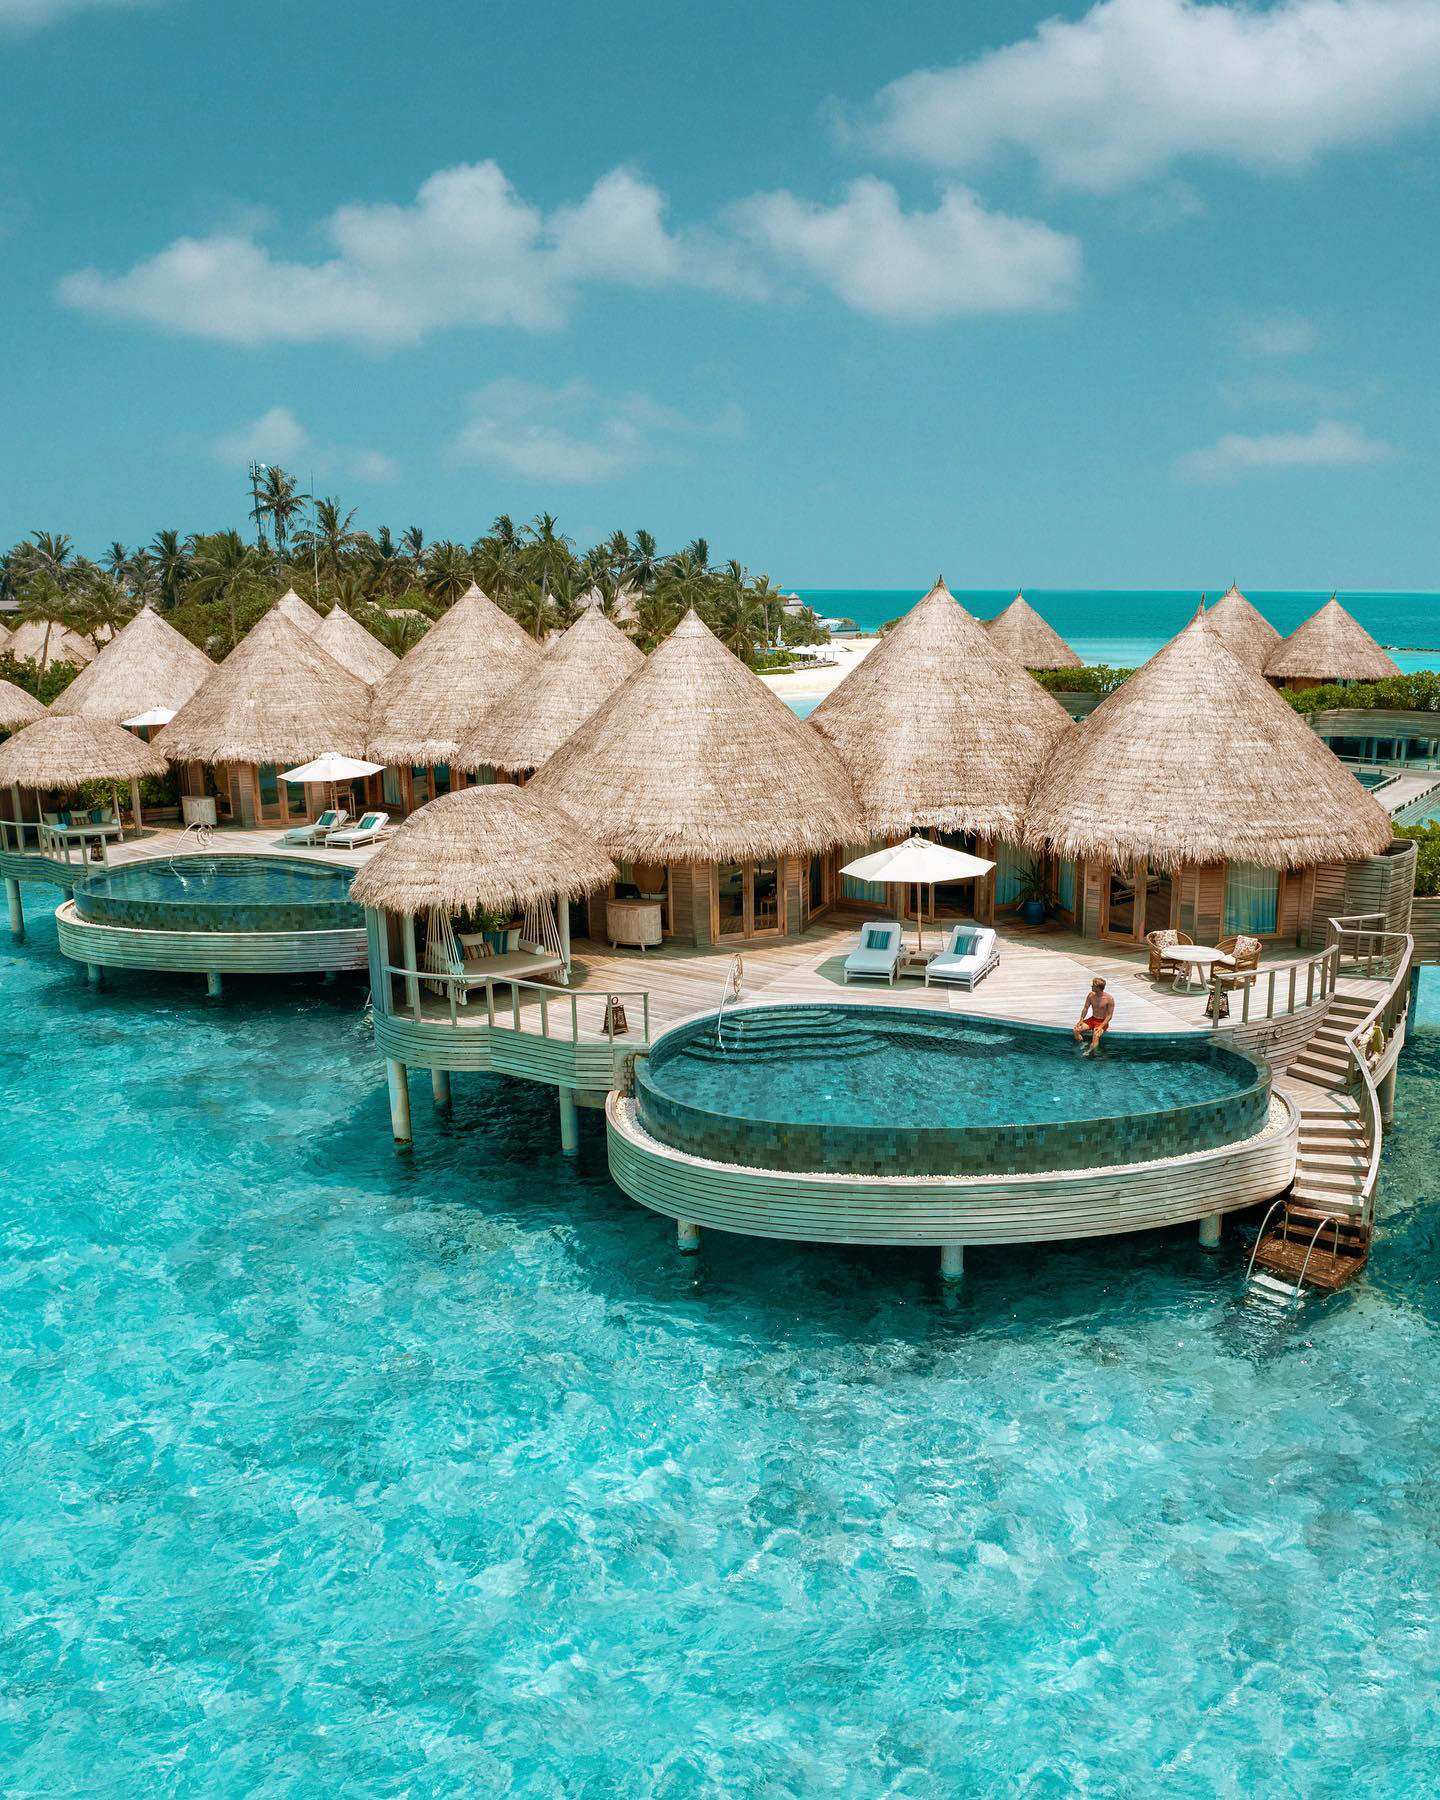 ➳ 	Λ L E X - Feels so good to be back at the most exclusive resort in the Maldives